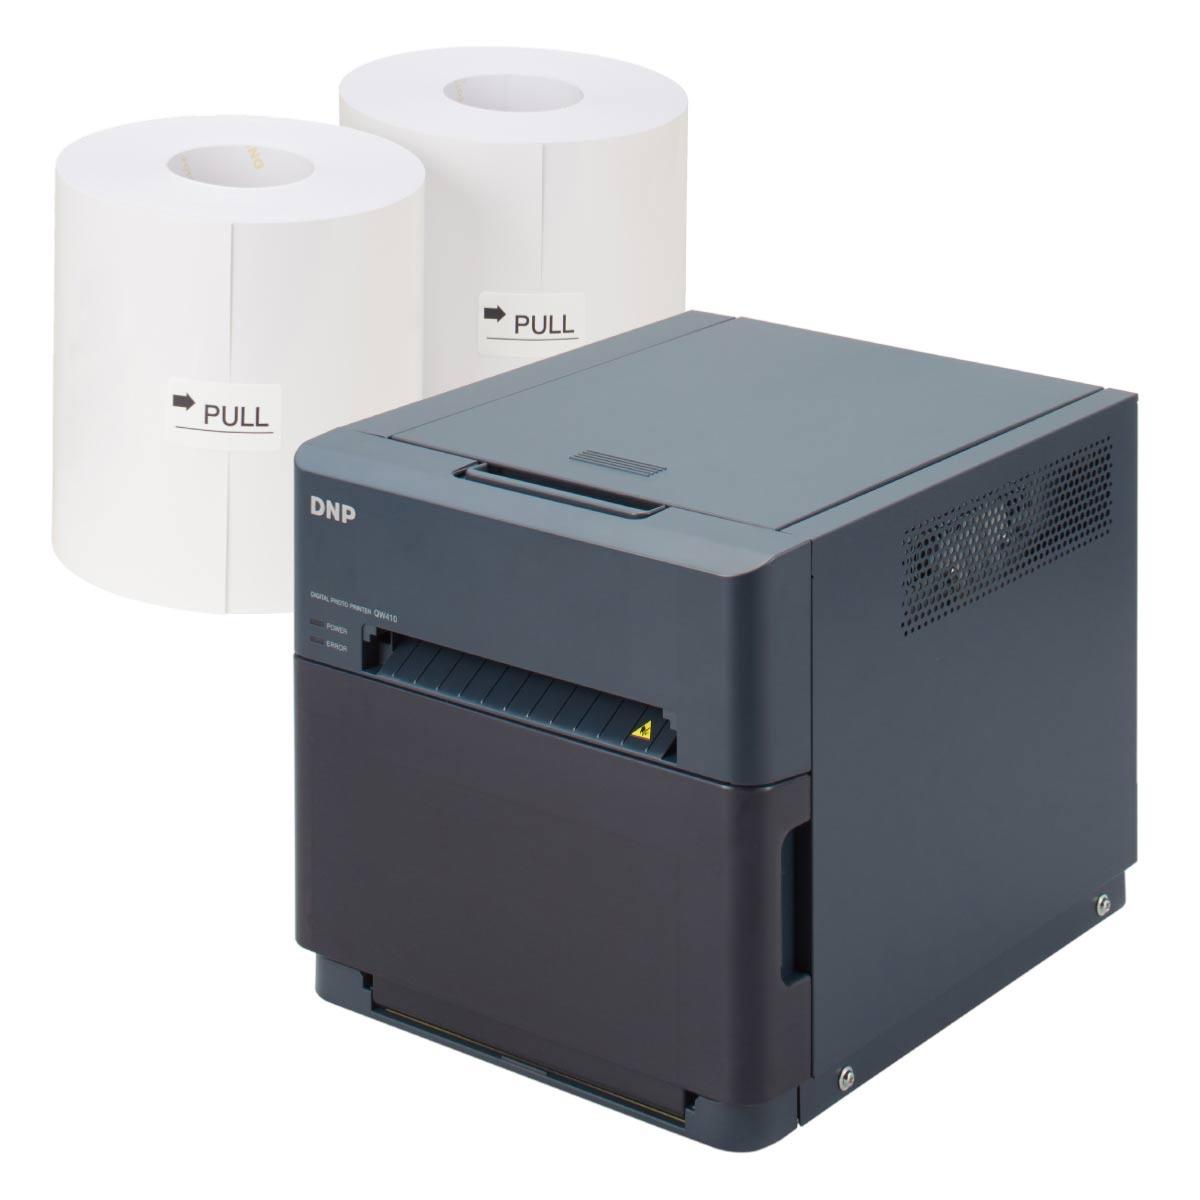 DNP Imprimante QW410 + 1 carton papier 10x15 SD